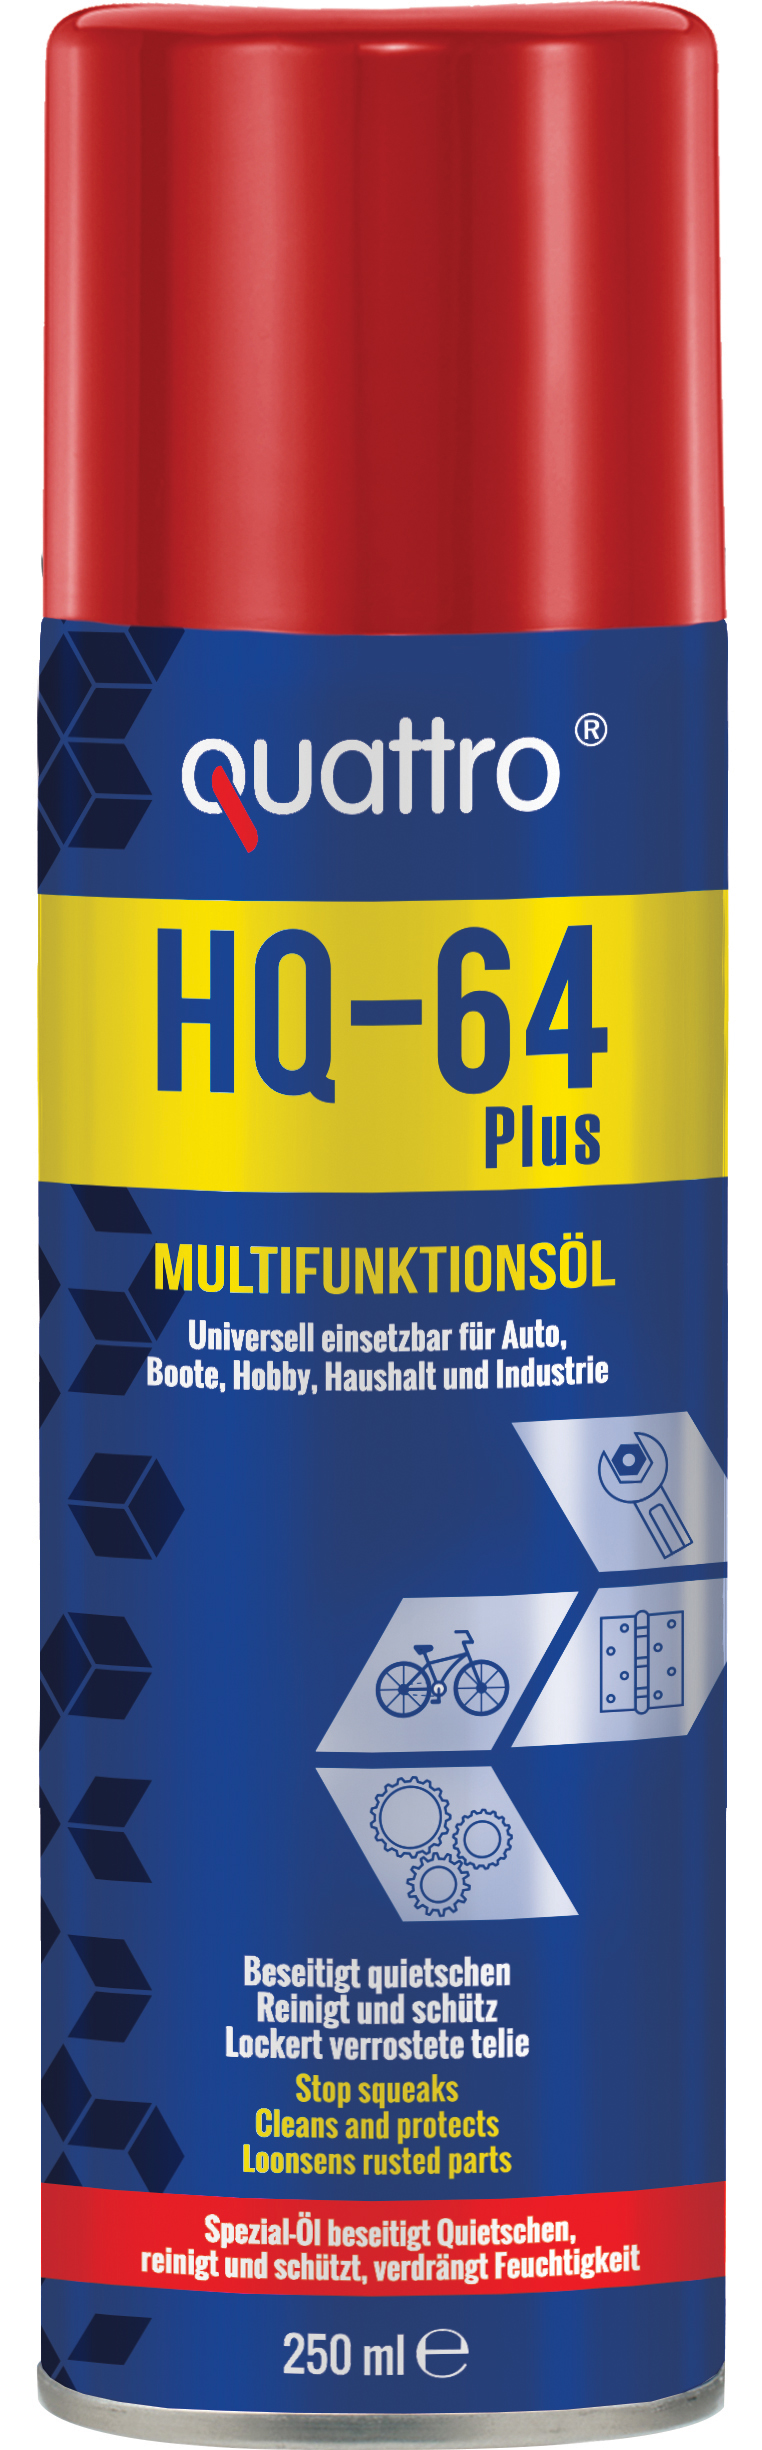 00716 - multi purpose oil HQ-64 Plus 250 ml (like WD-40)